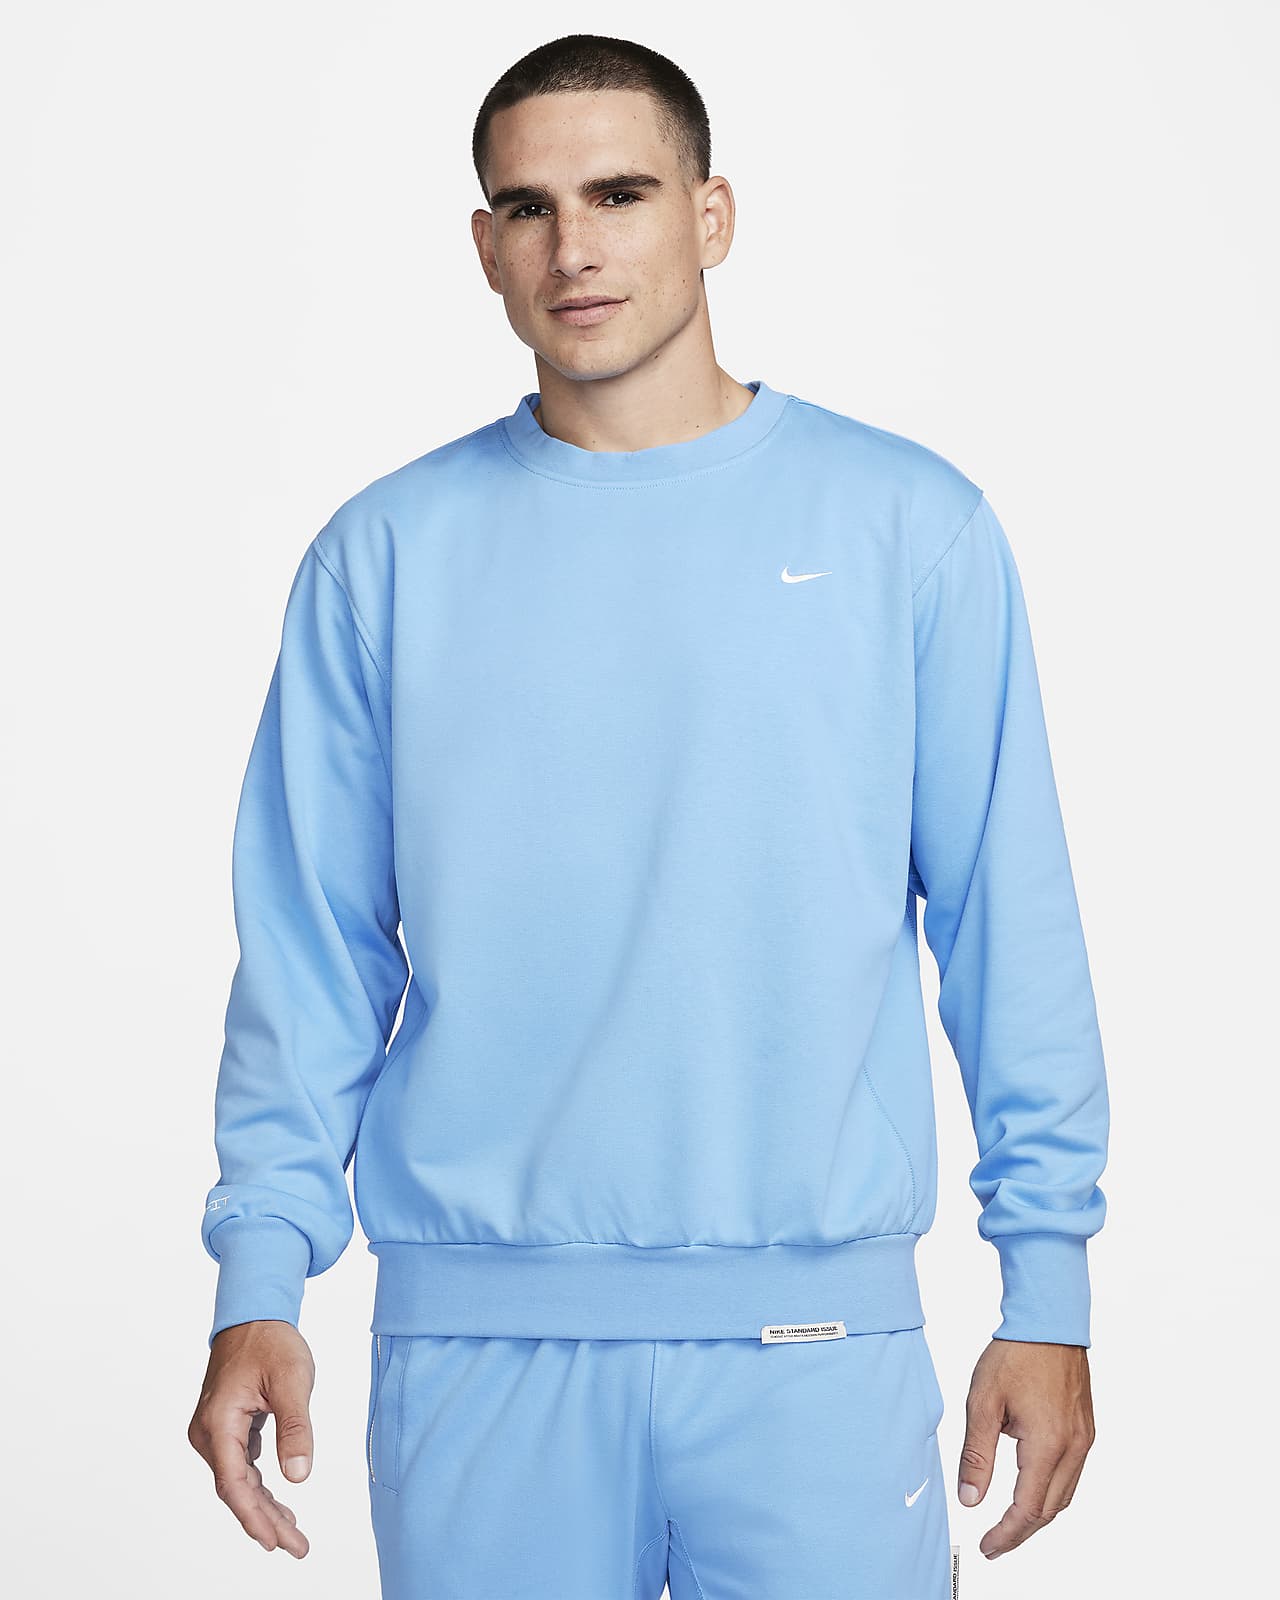 Golden State Warriors Standard Issue Men's Nike Dri-FIT NBA Sweatshirt – 21  Exclusive Brand LLC.